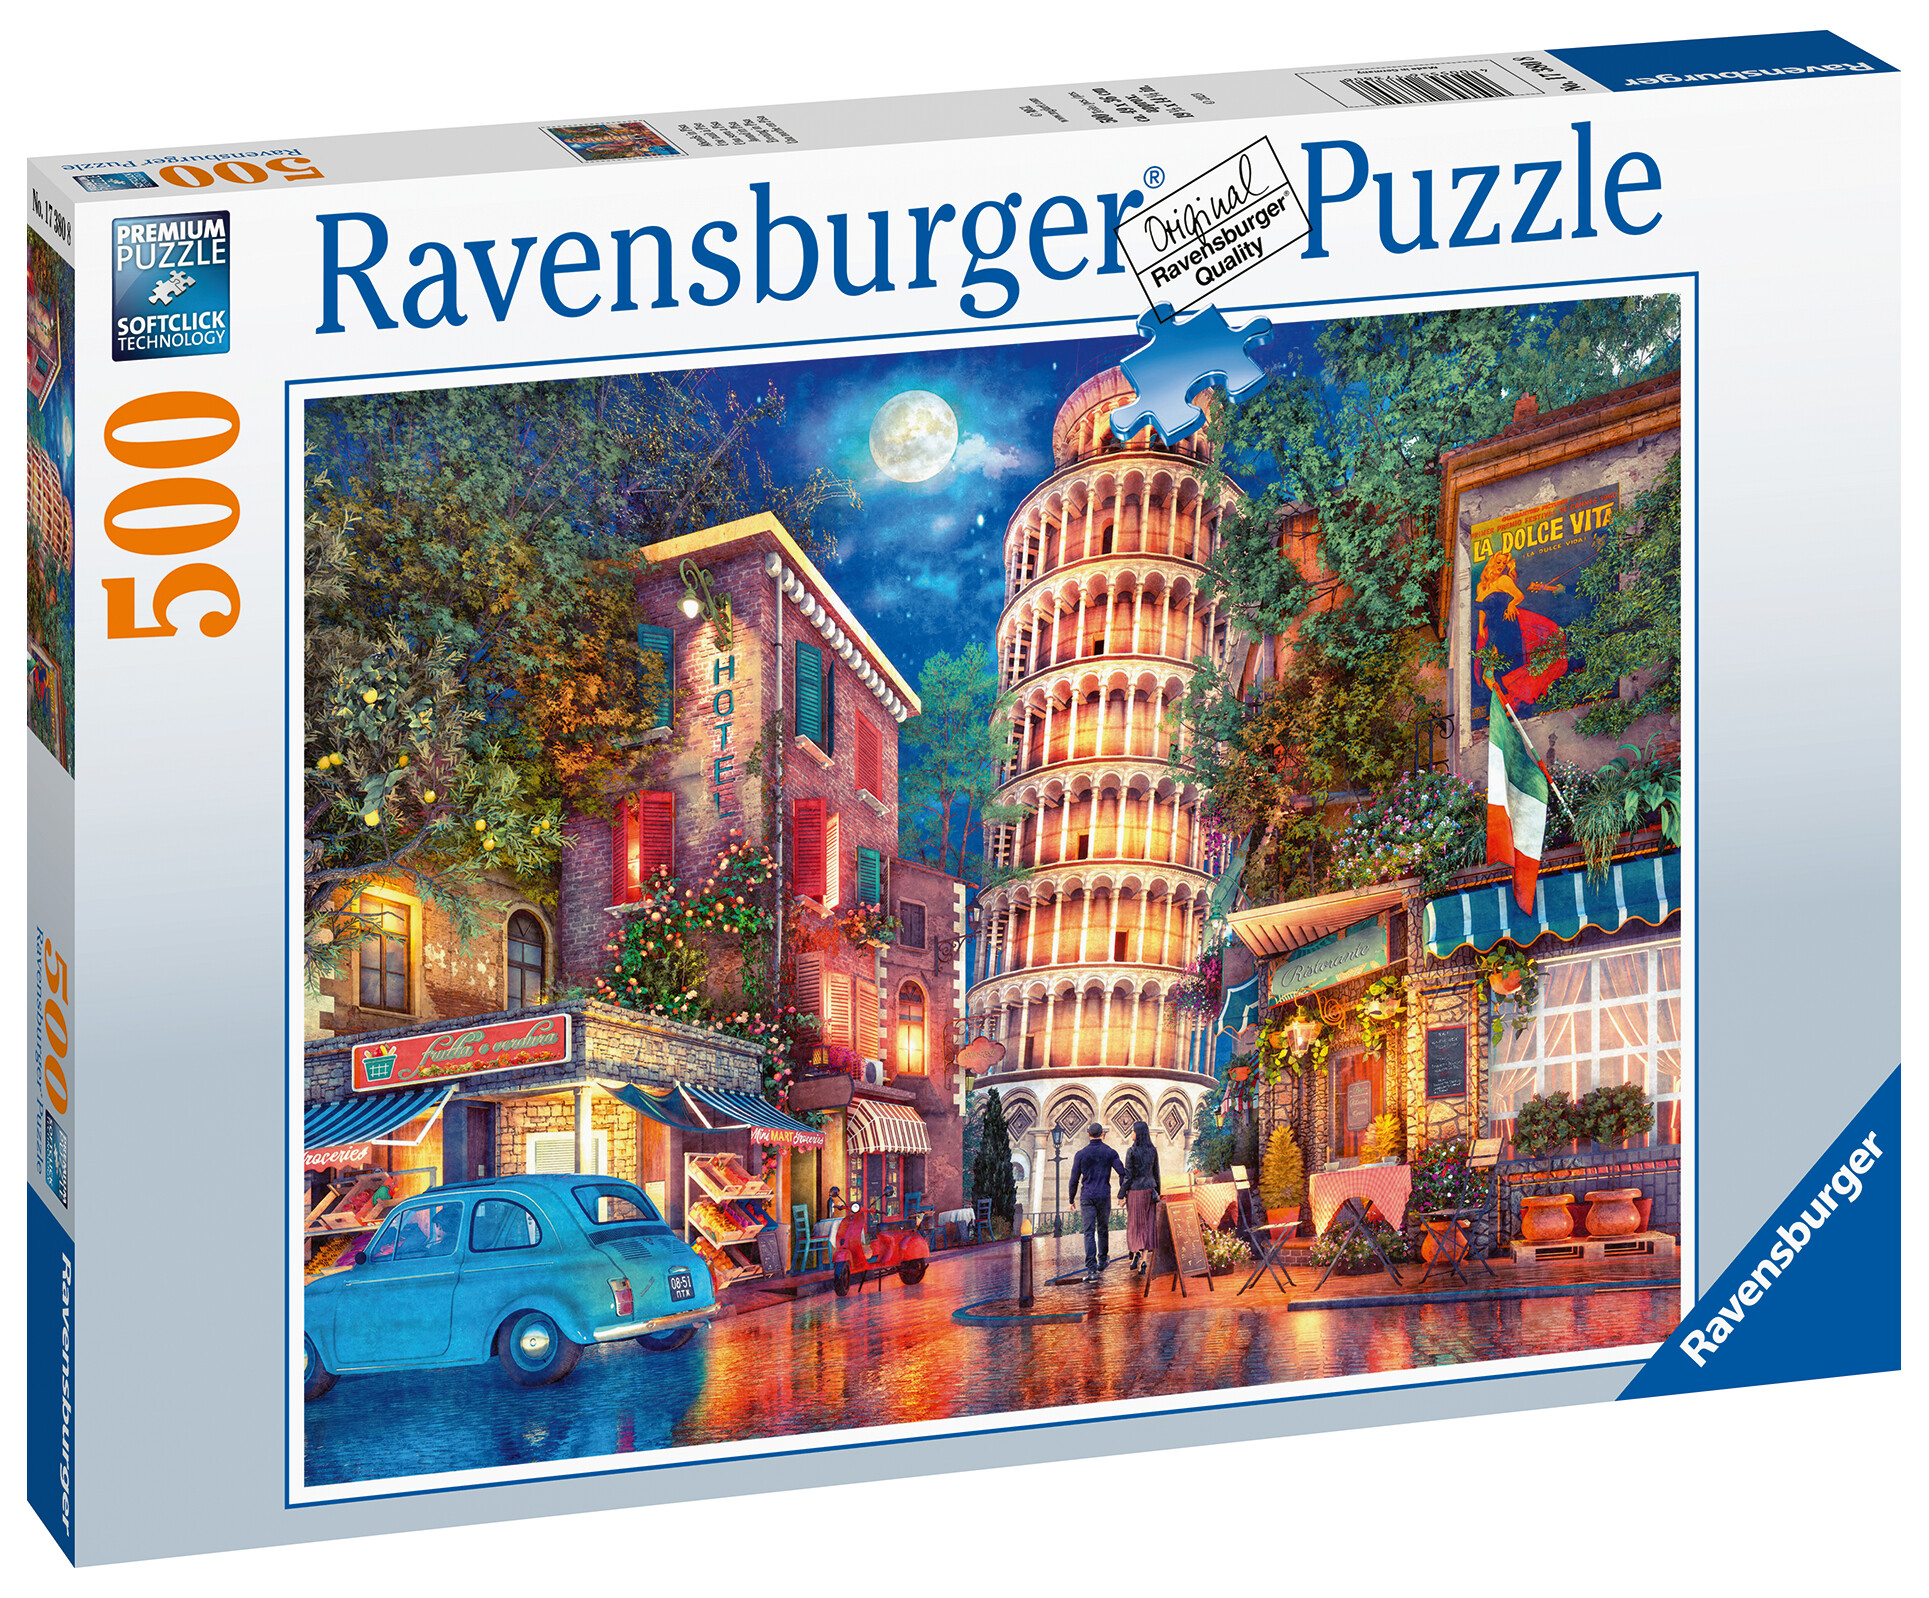 Ravensburger - puzzle una sera a pisa, 500 pezzi, puzzle adulti - RAVENSBURGER